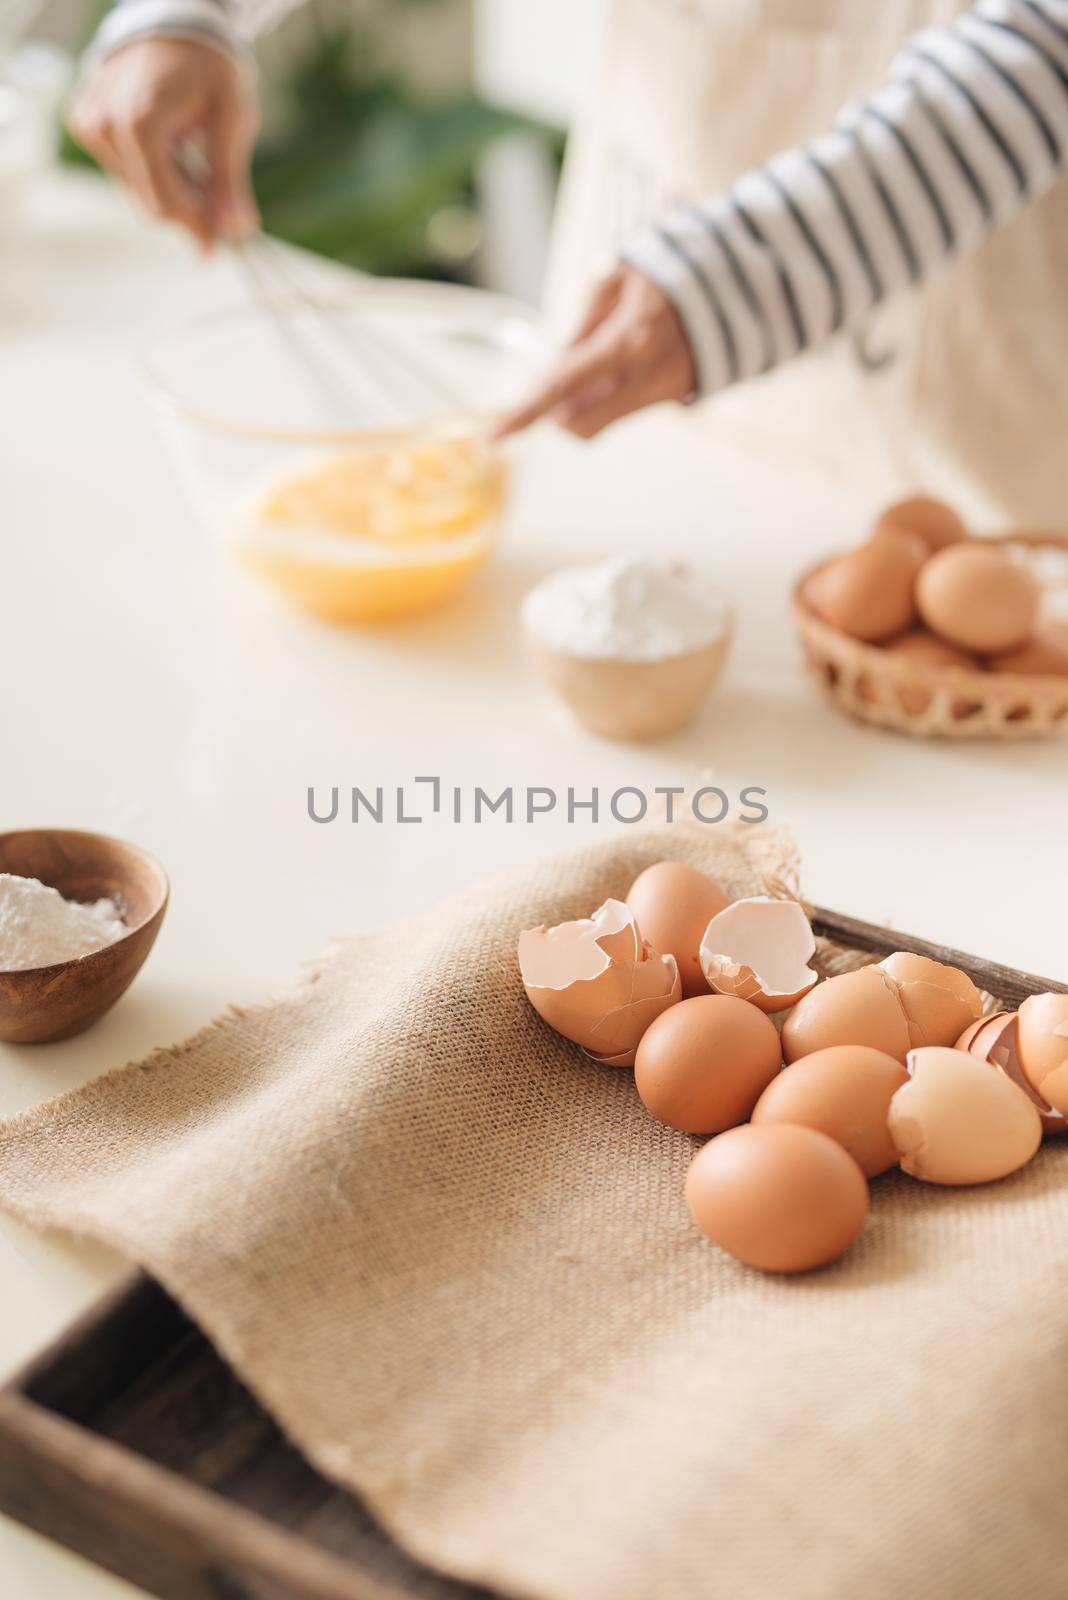 Man whisking eggs food photography recipe idea